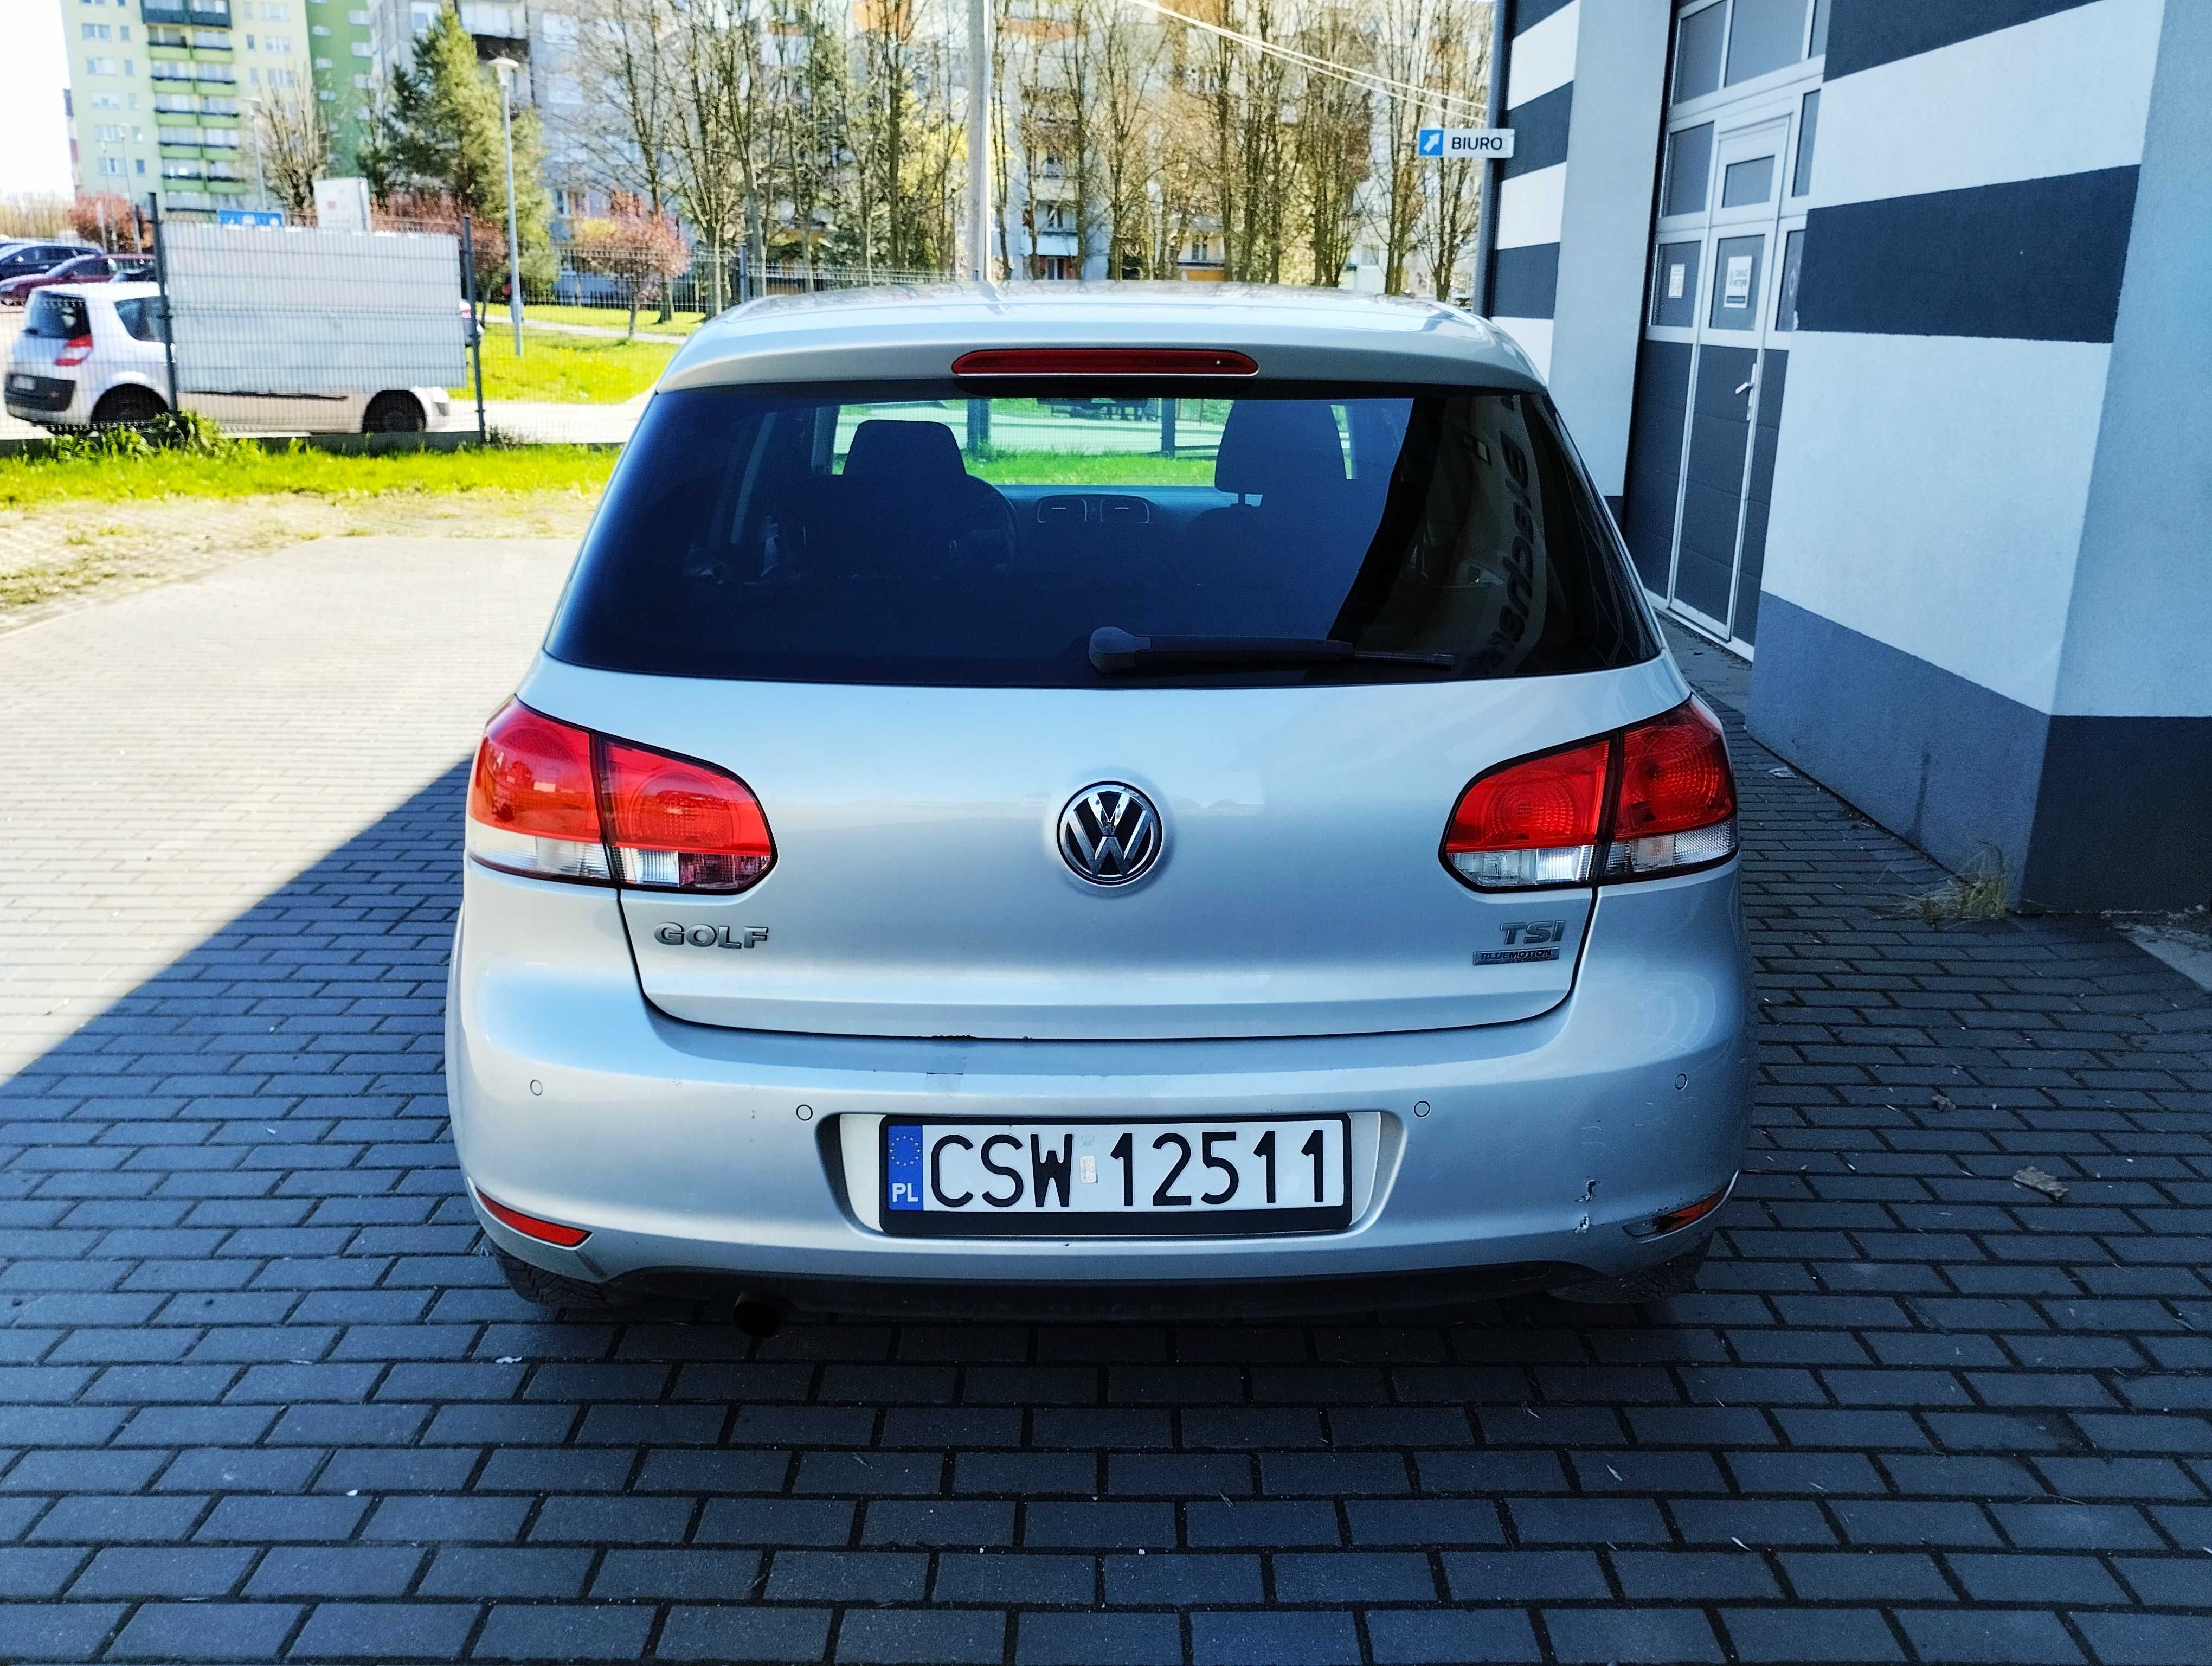 VW Golf 6. 1.2 TSI, Automat. 5 drzwi. Climatronic